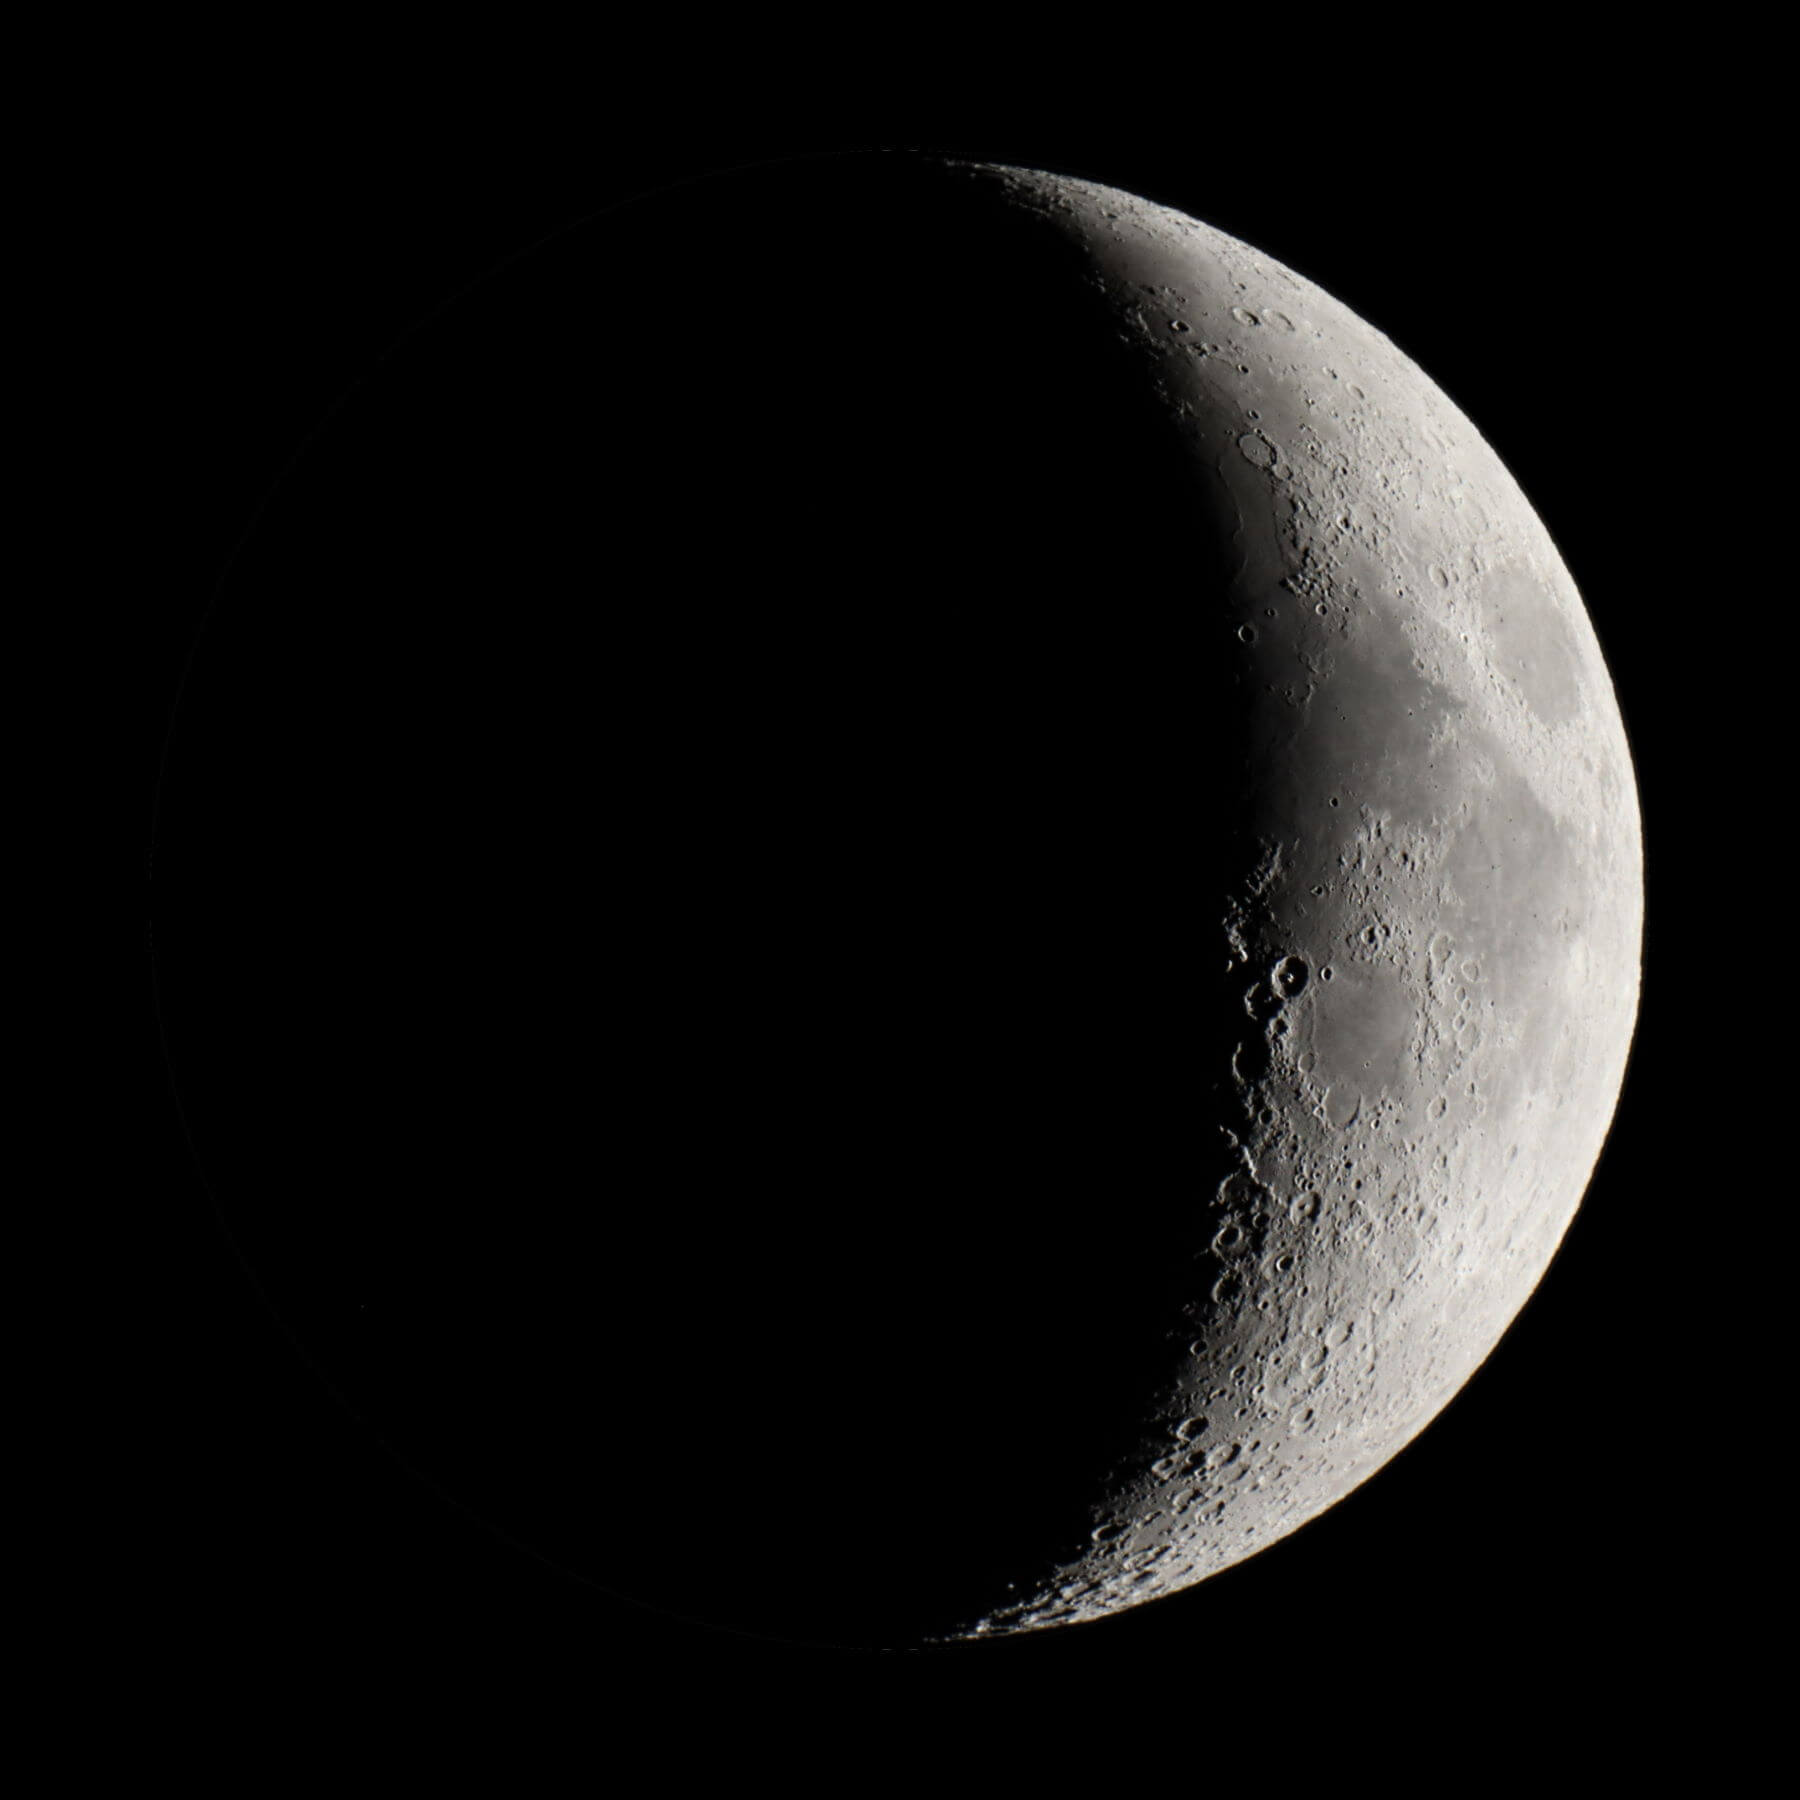 Waxing crescent Moon, 24% illumination